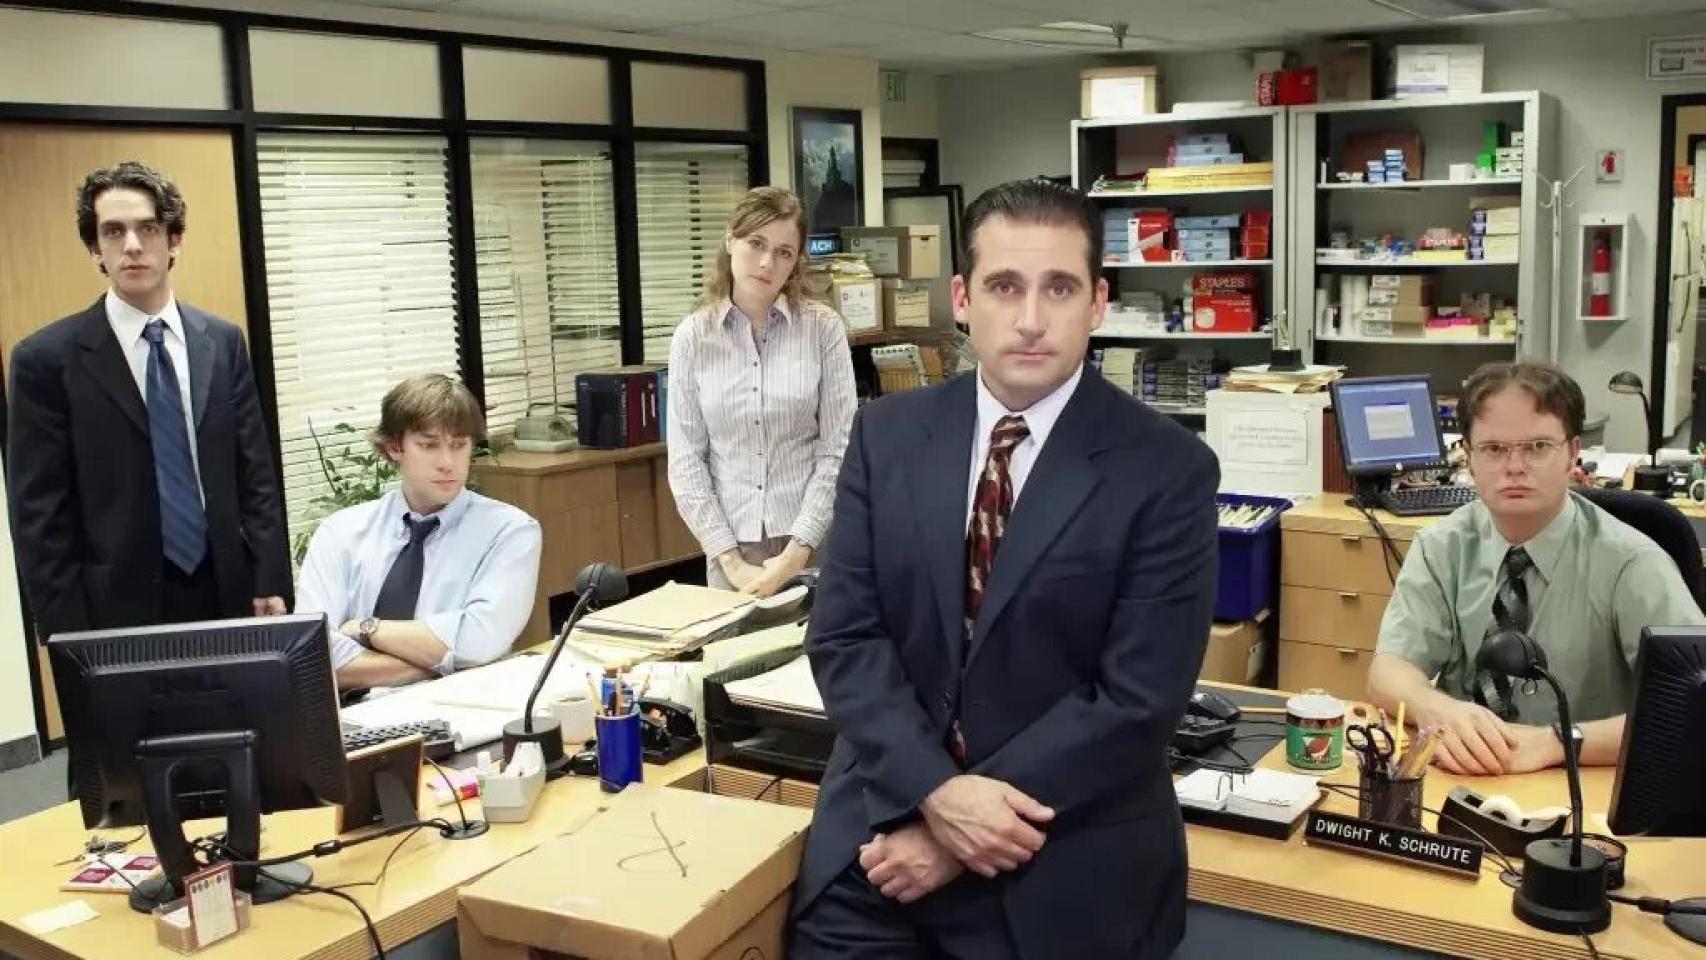 Personajes de la serie de comedia 'The Office'.